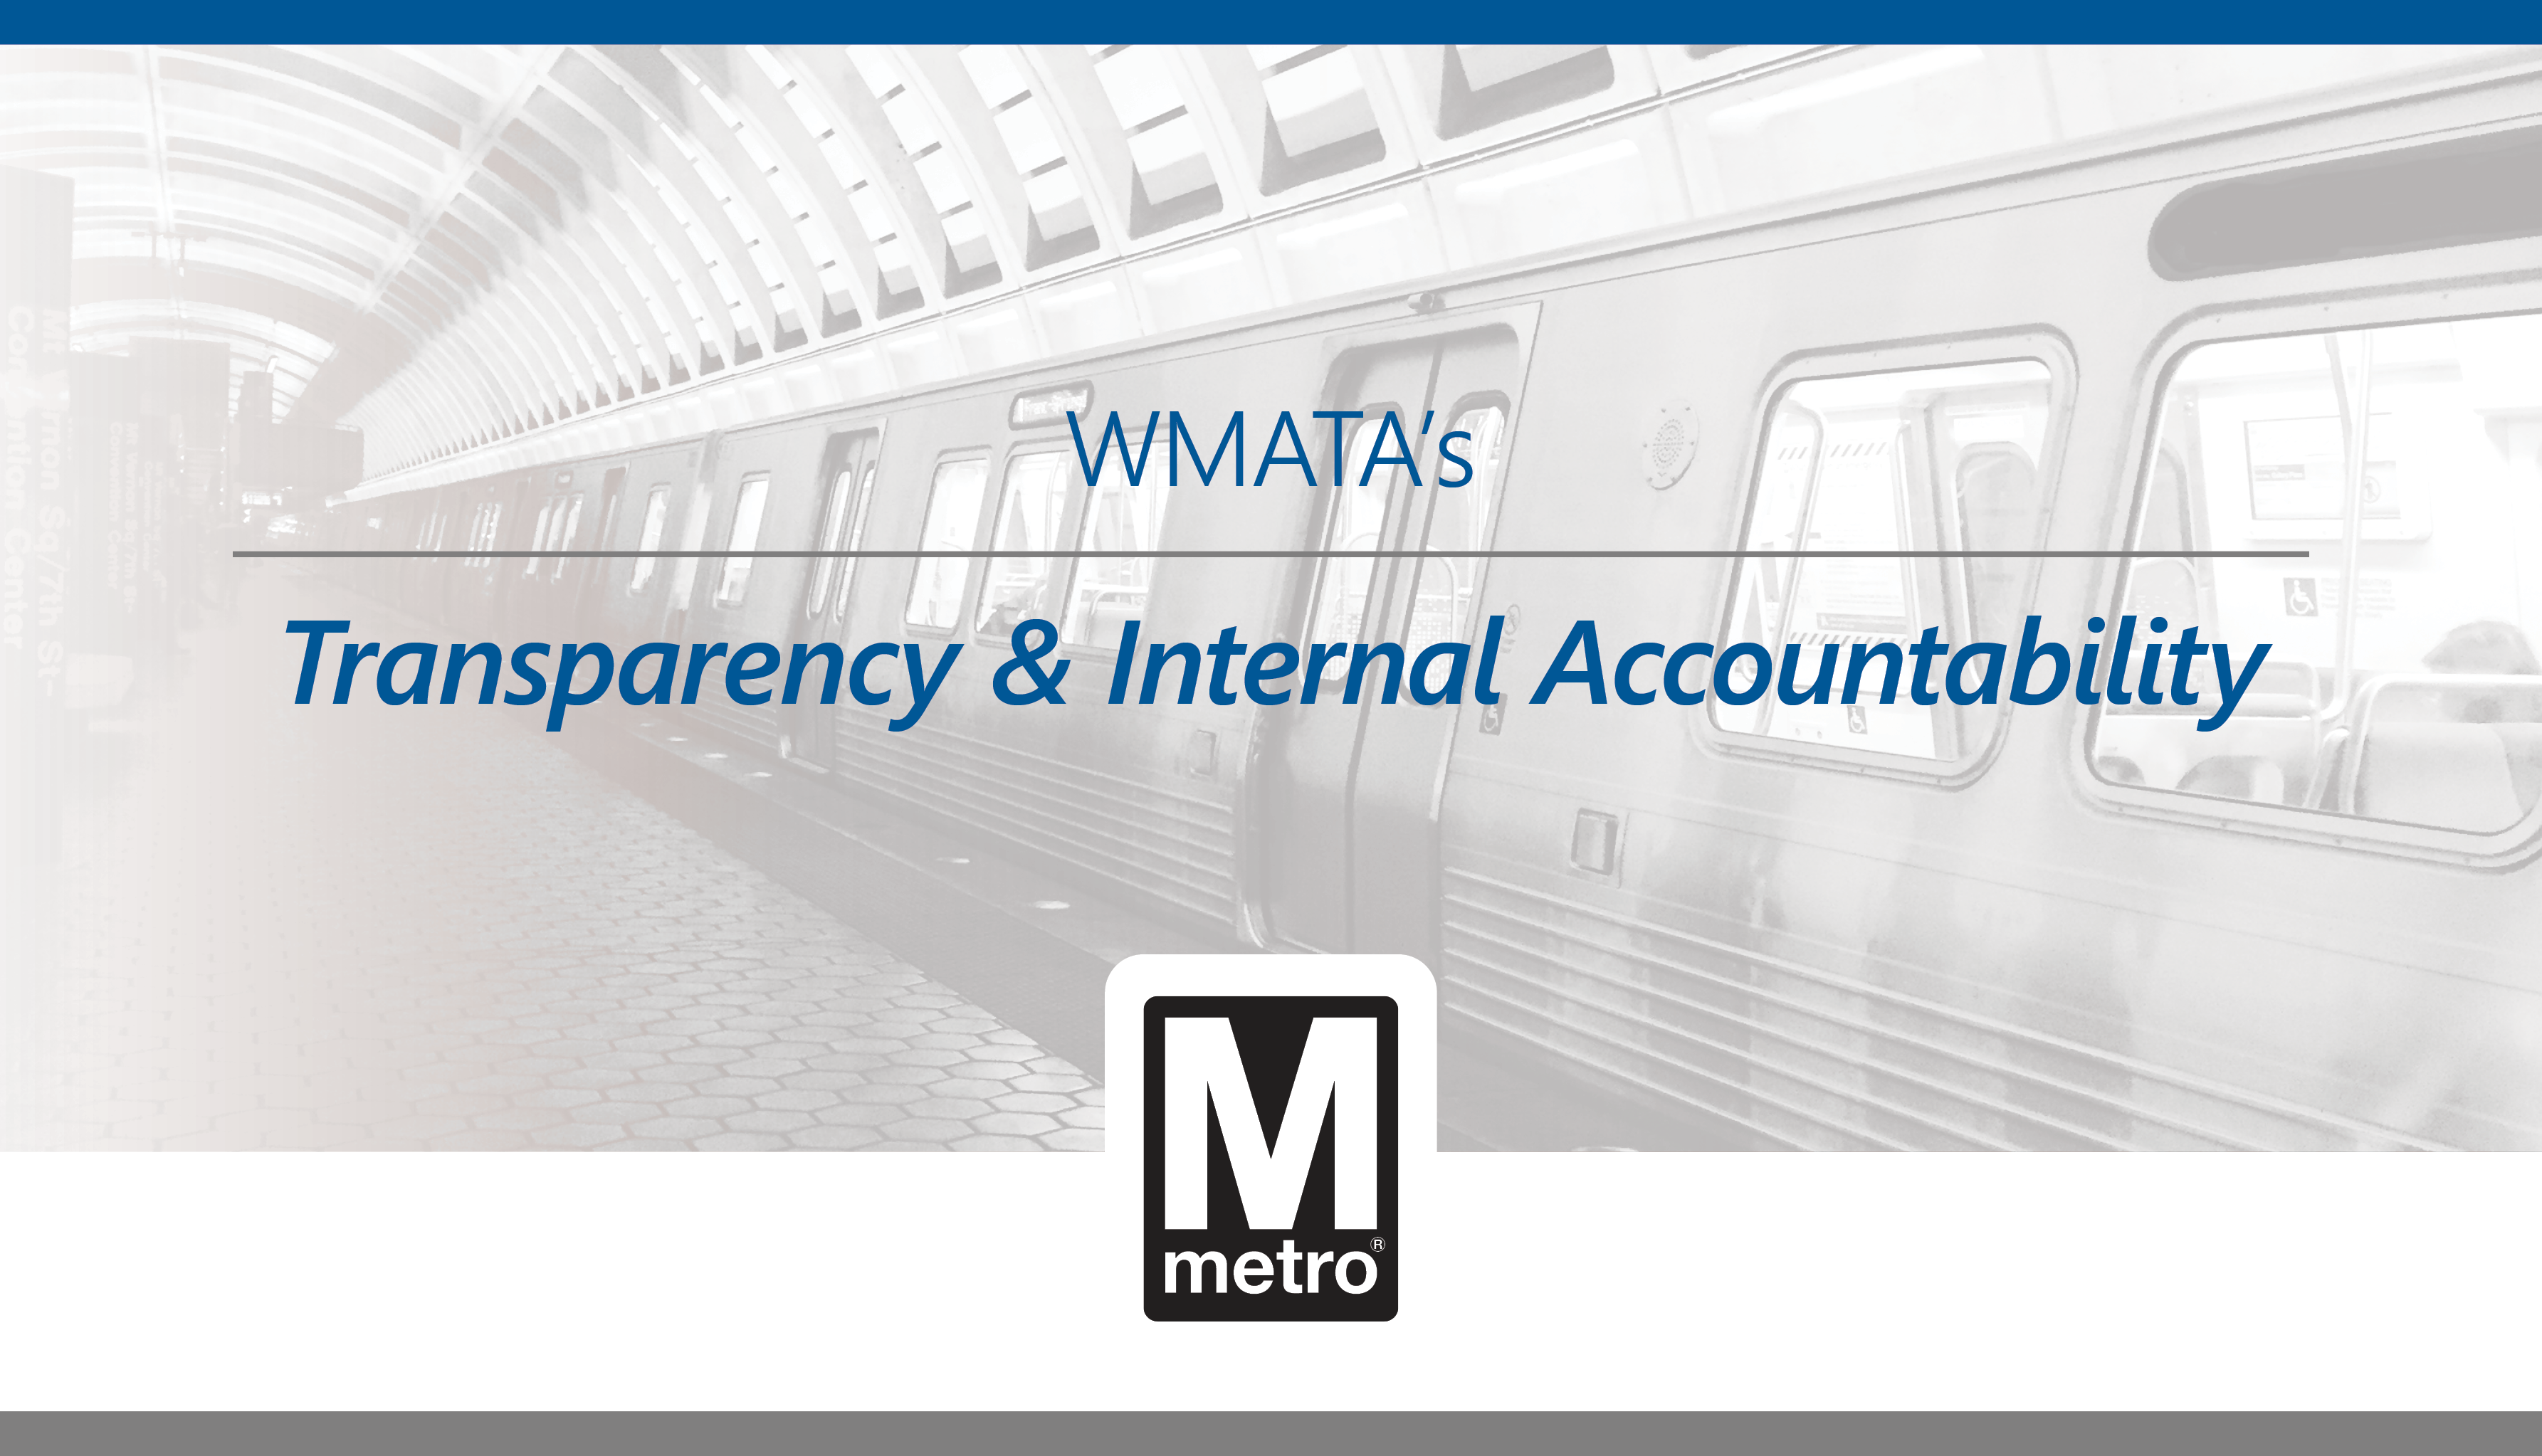 WMATA's Transparency & Internal Accountability